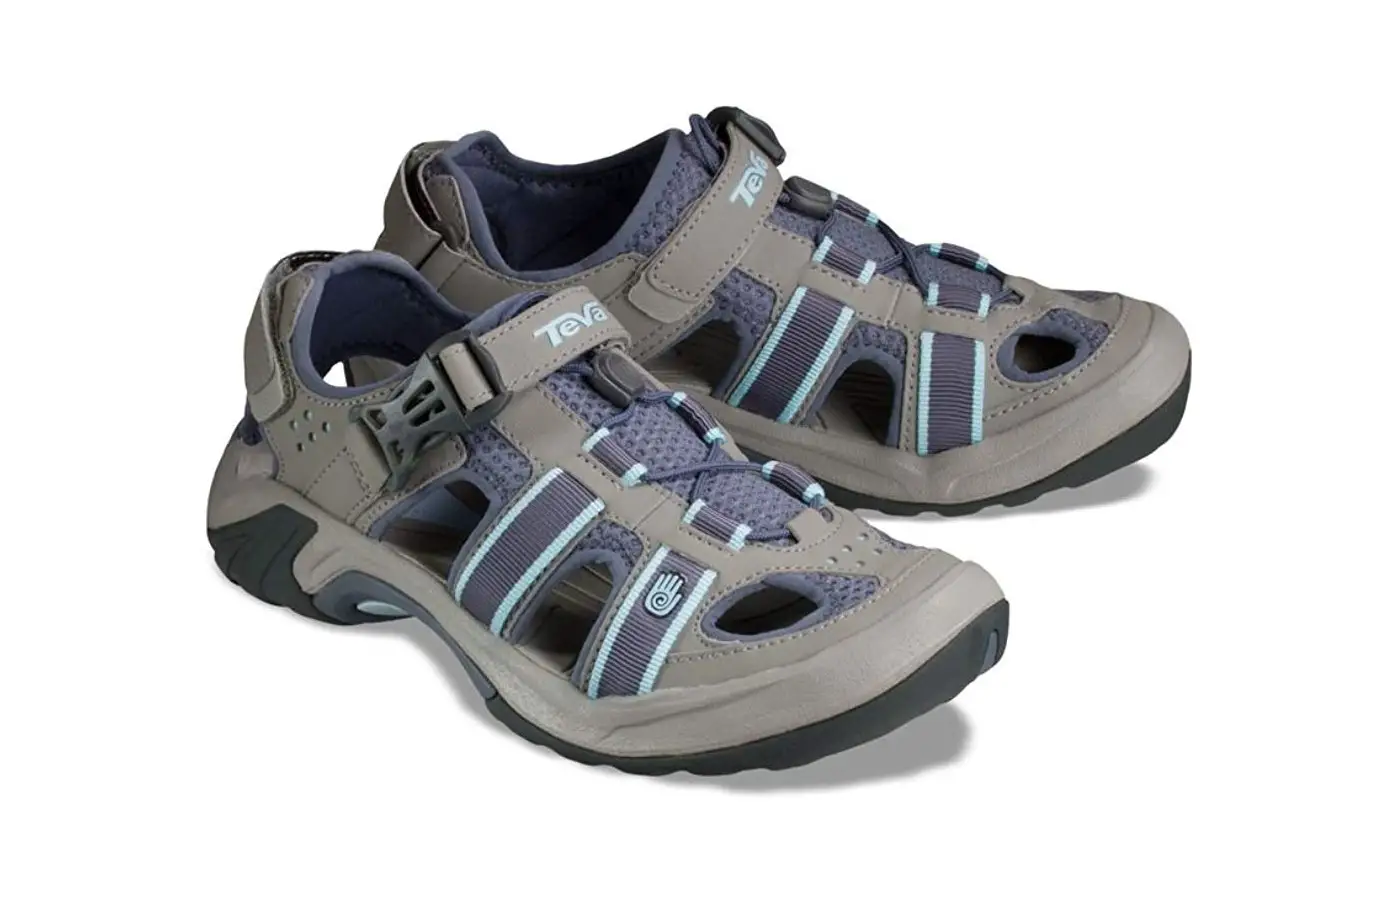 Teva Omnium Hiking Shoes Reviewed 5